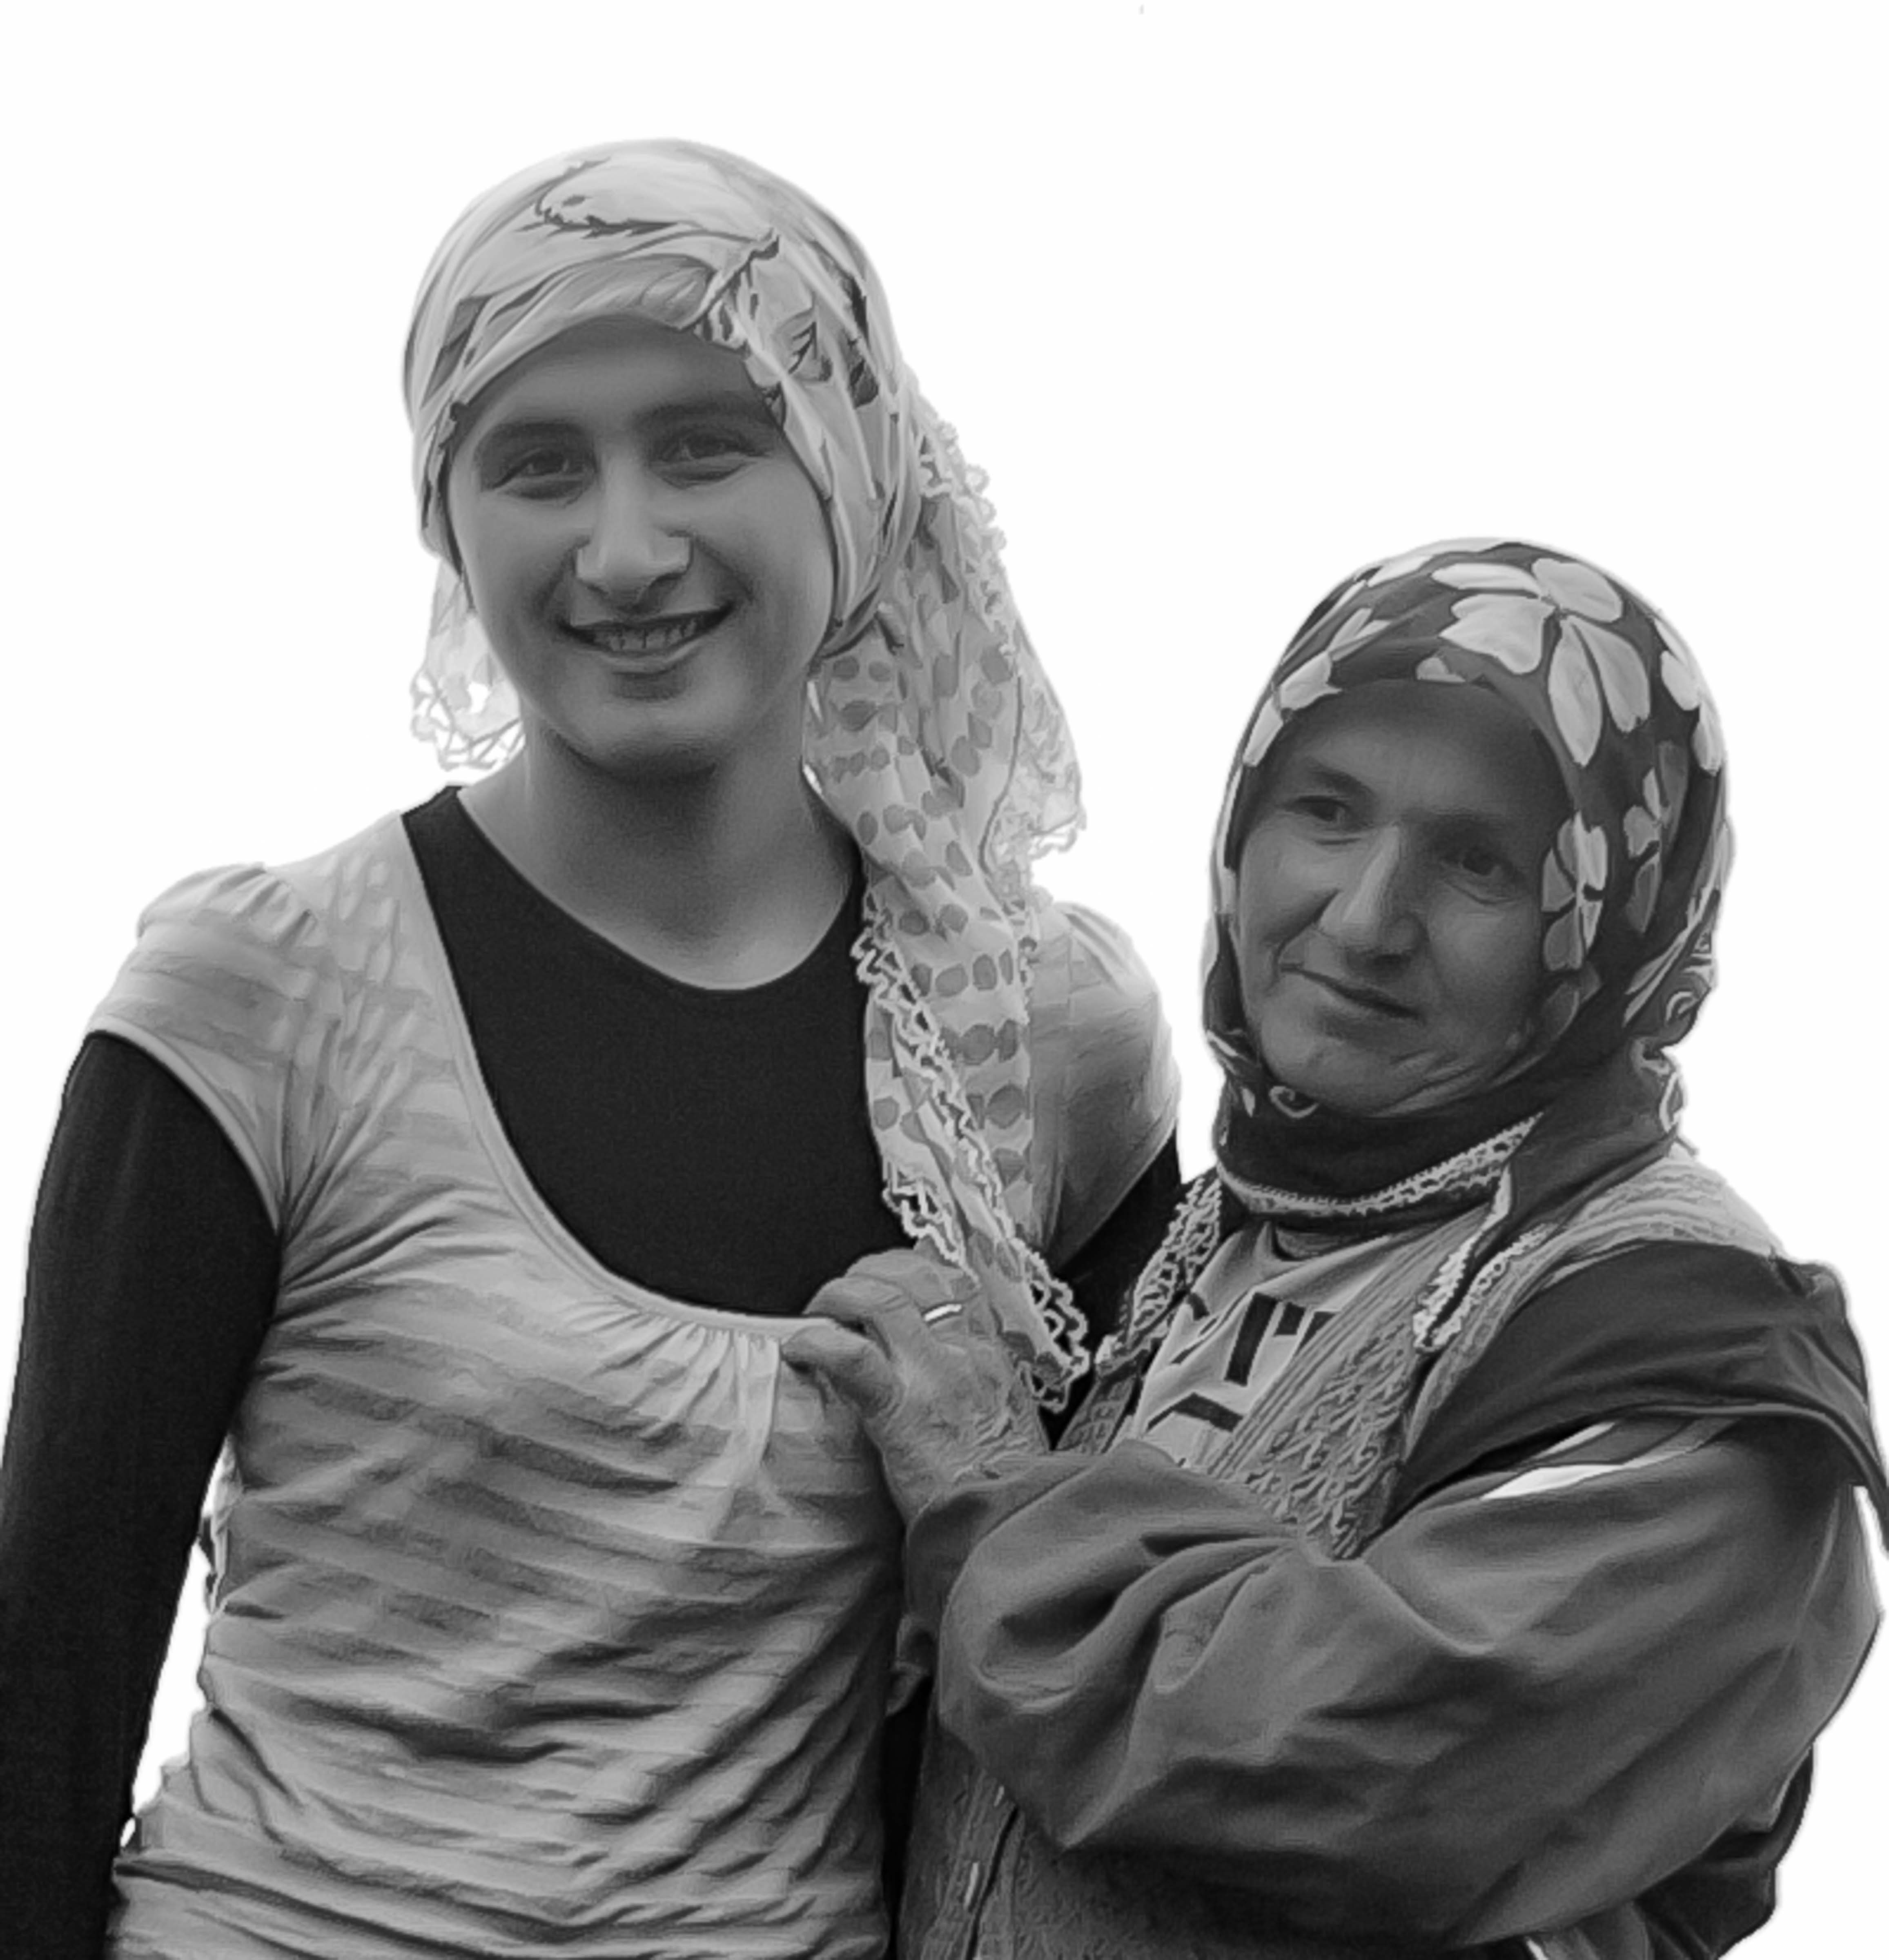 Turkey, Trabzon Prov, Trabzon Women, 2010, IMG 7511